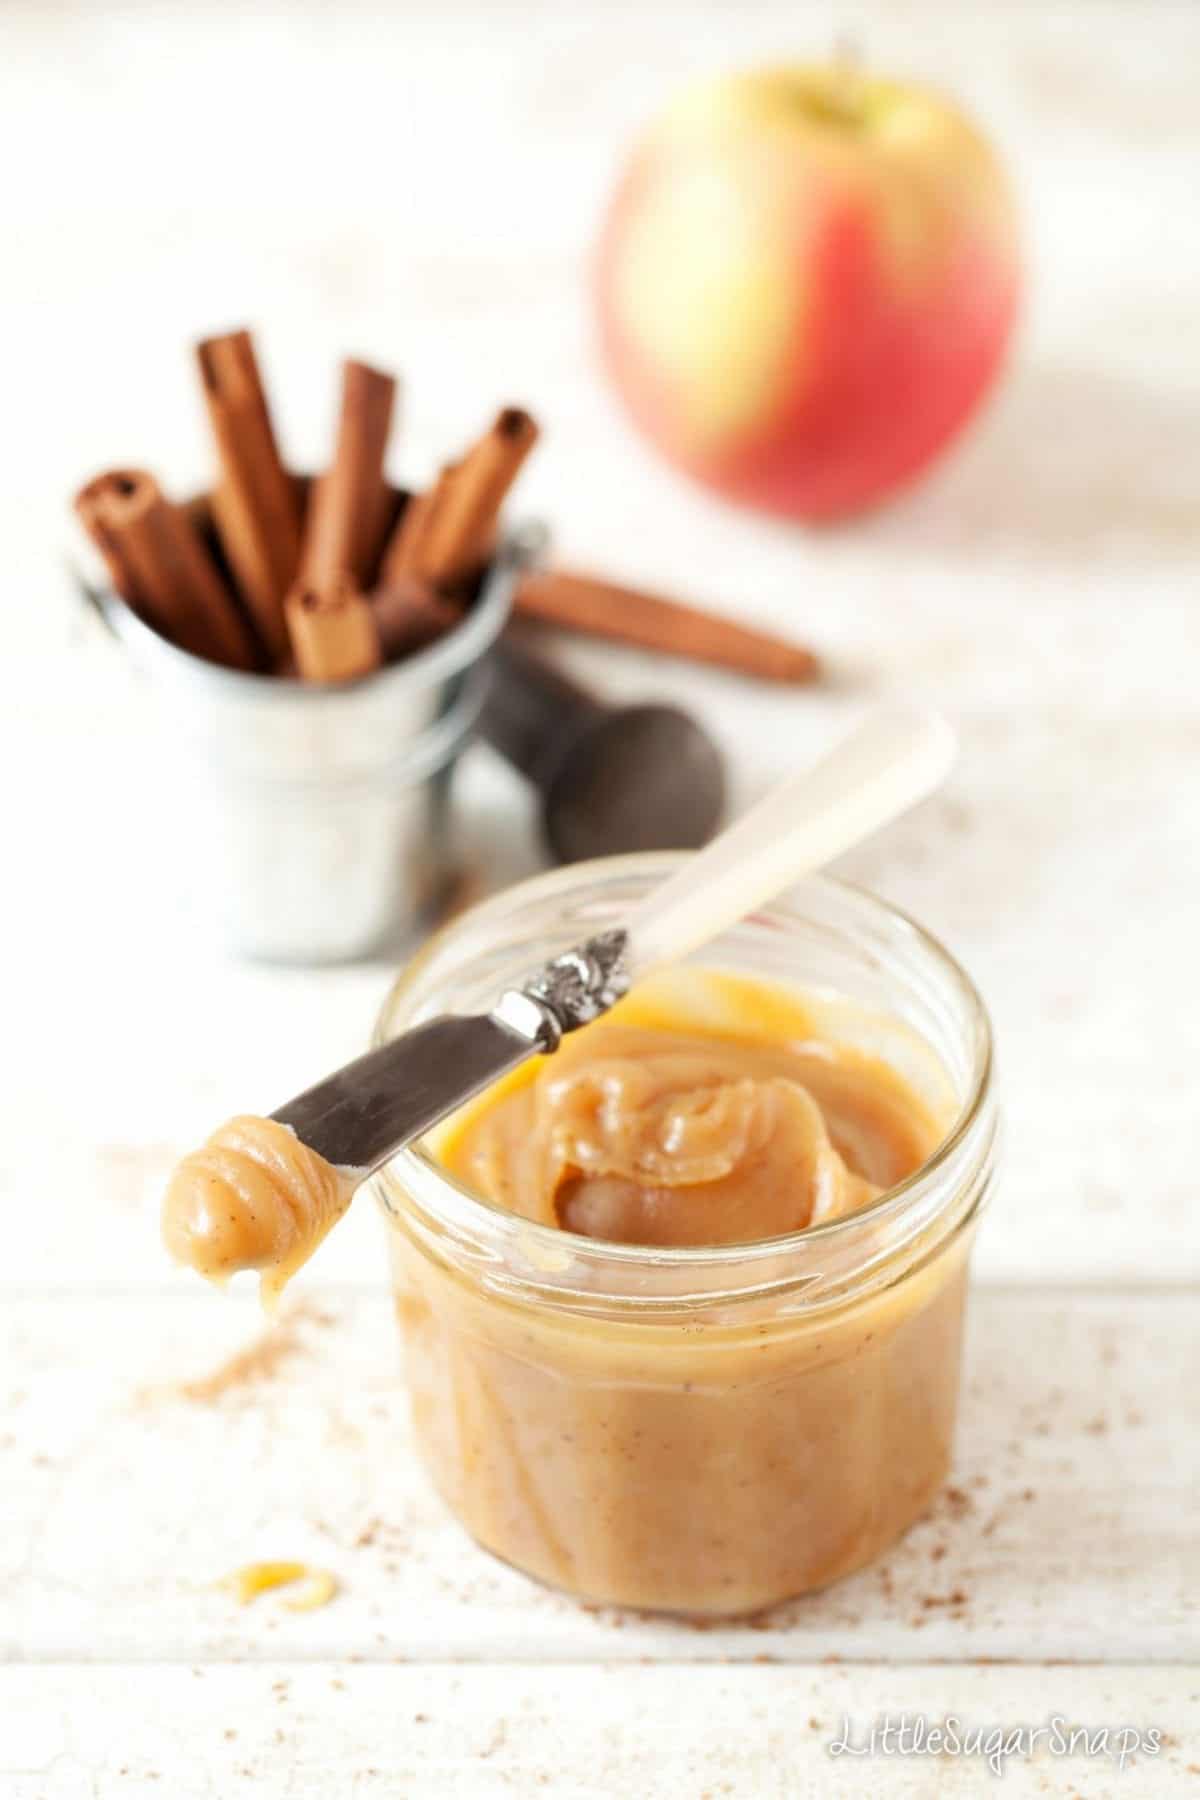 A jar of caramel apple dip with a vintage knife resting on the side.